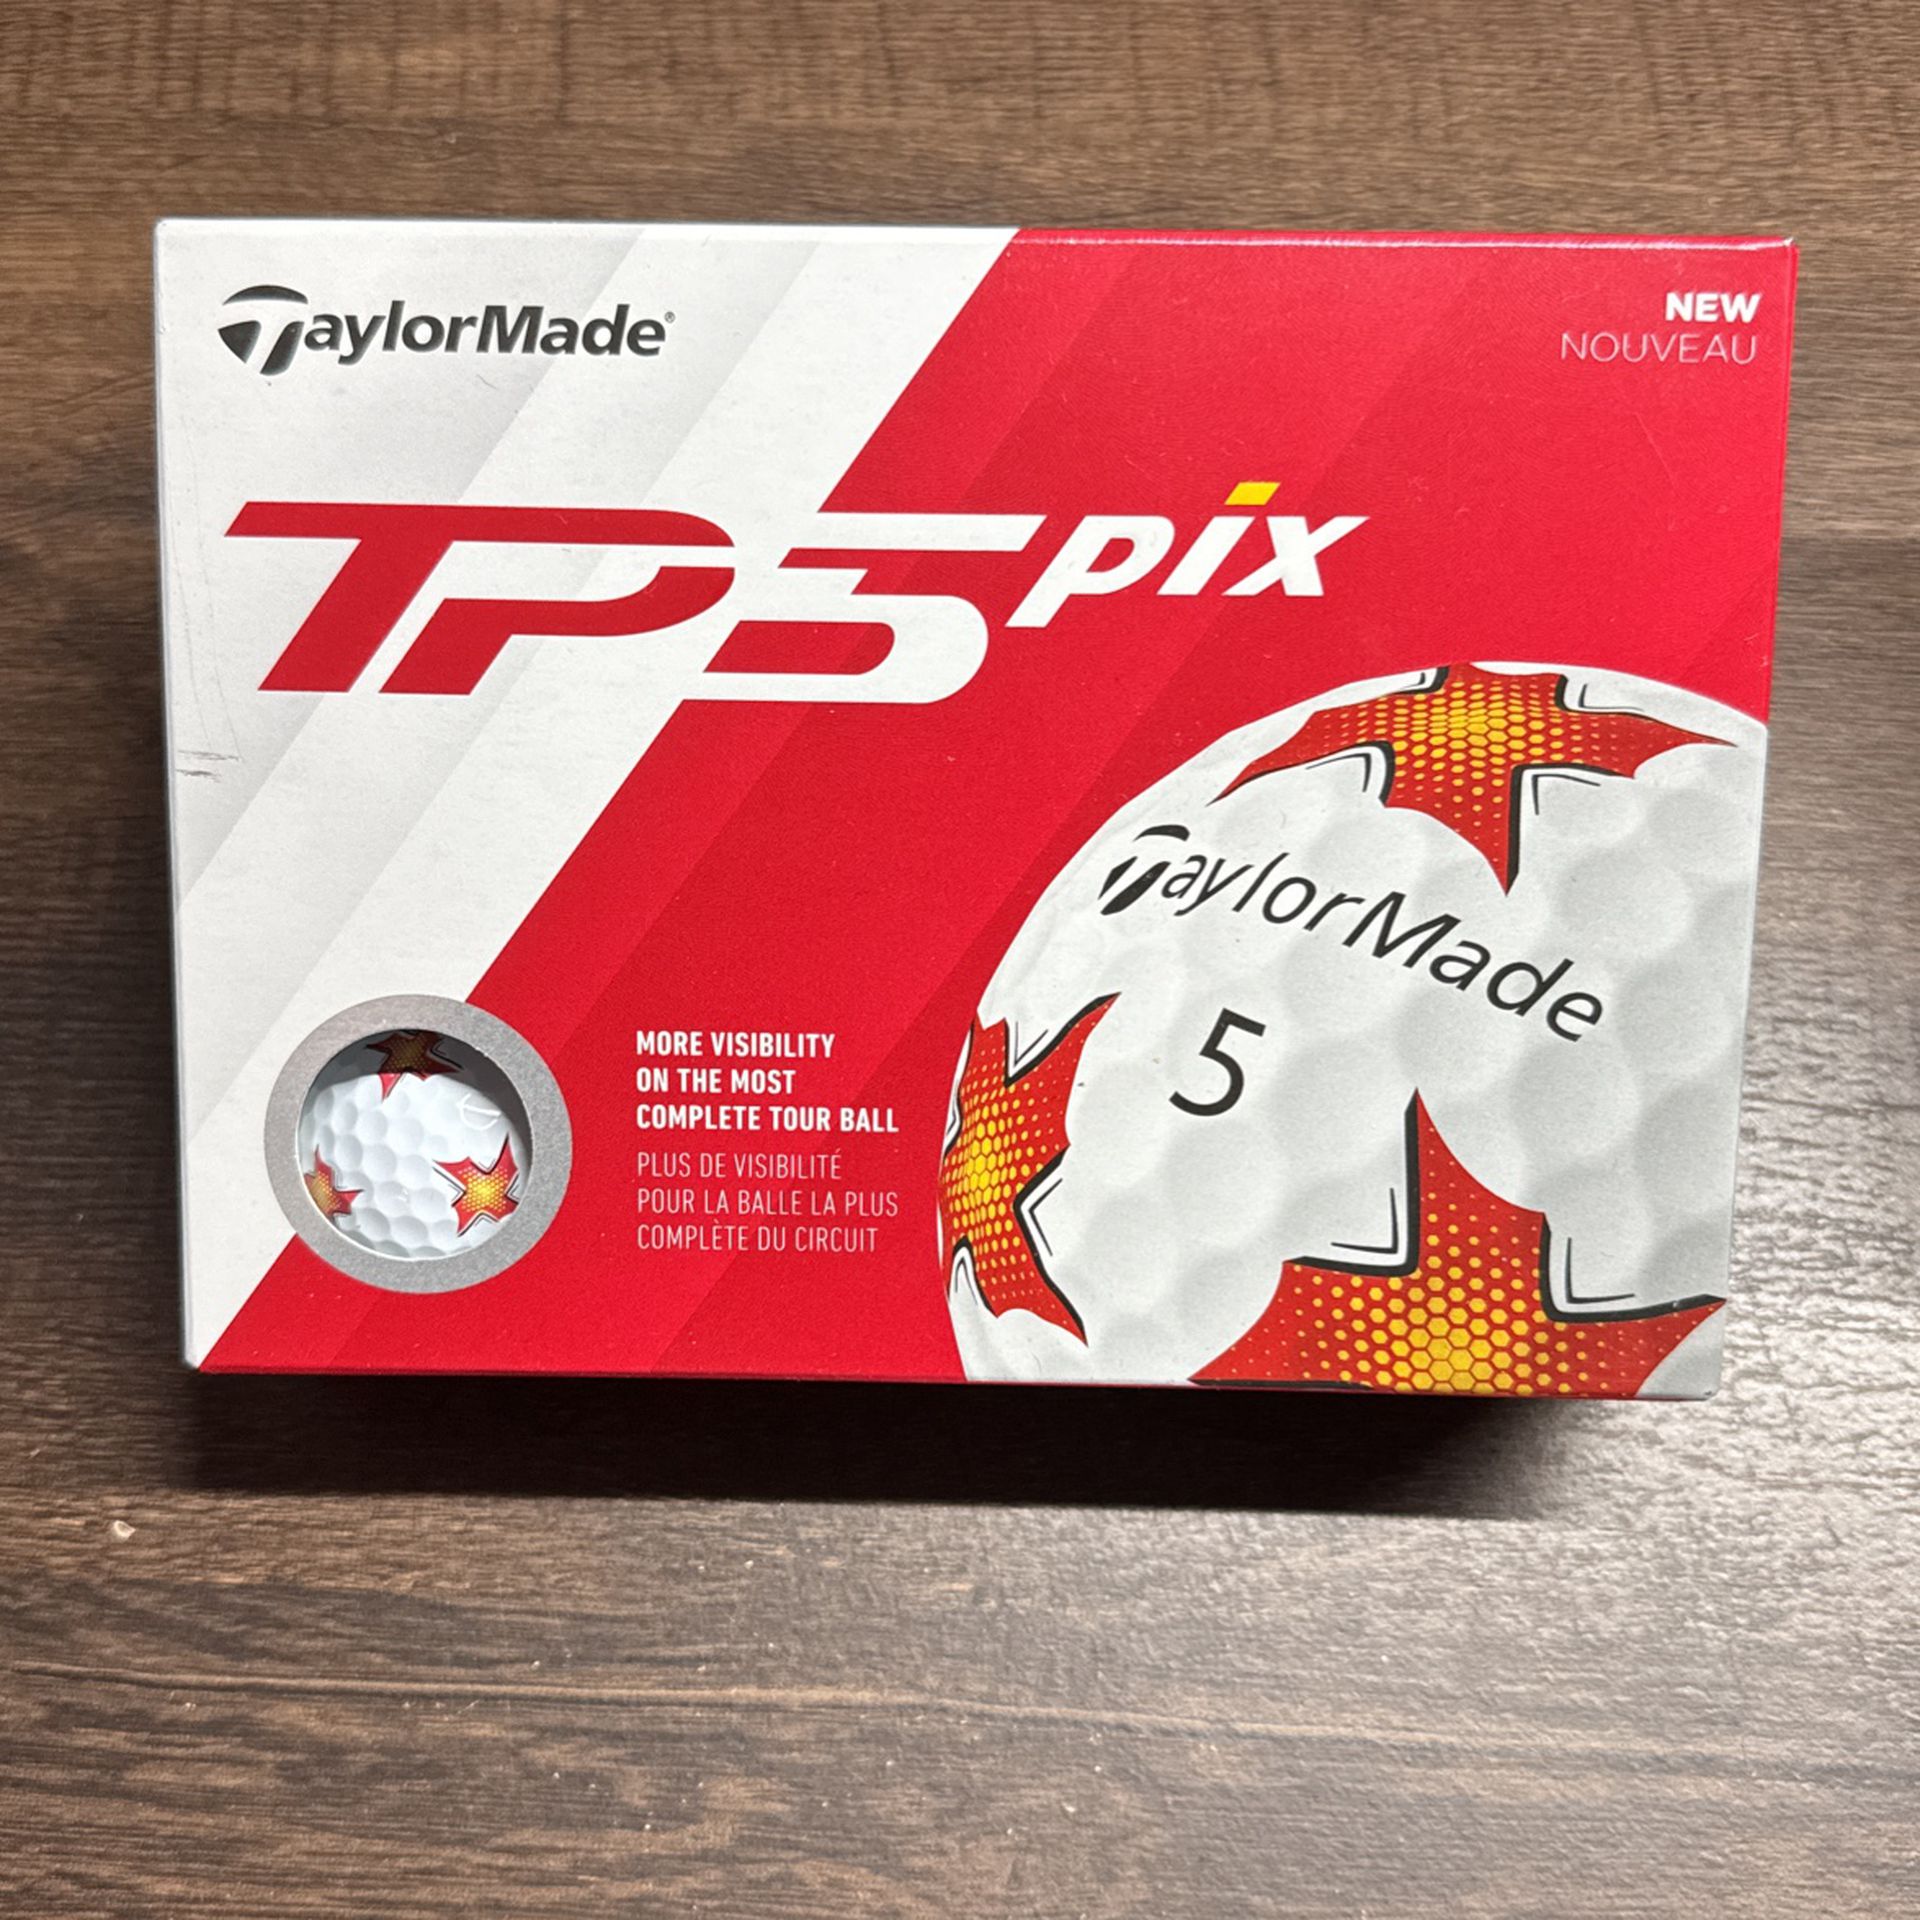 Taylormade TP5 Pix, Original (New) Golfballs